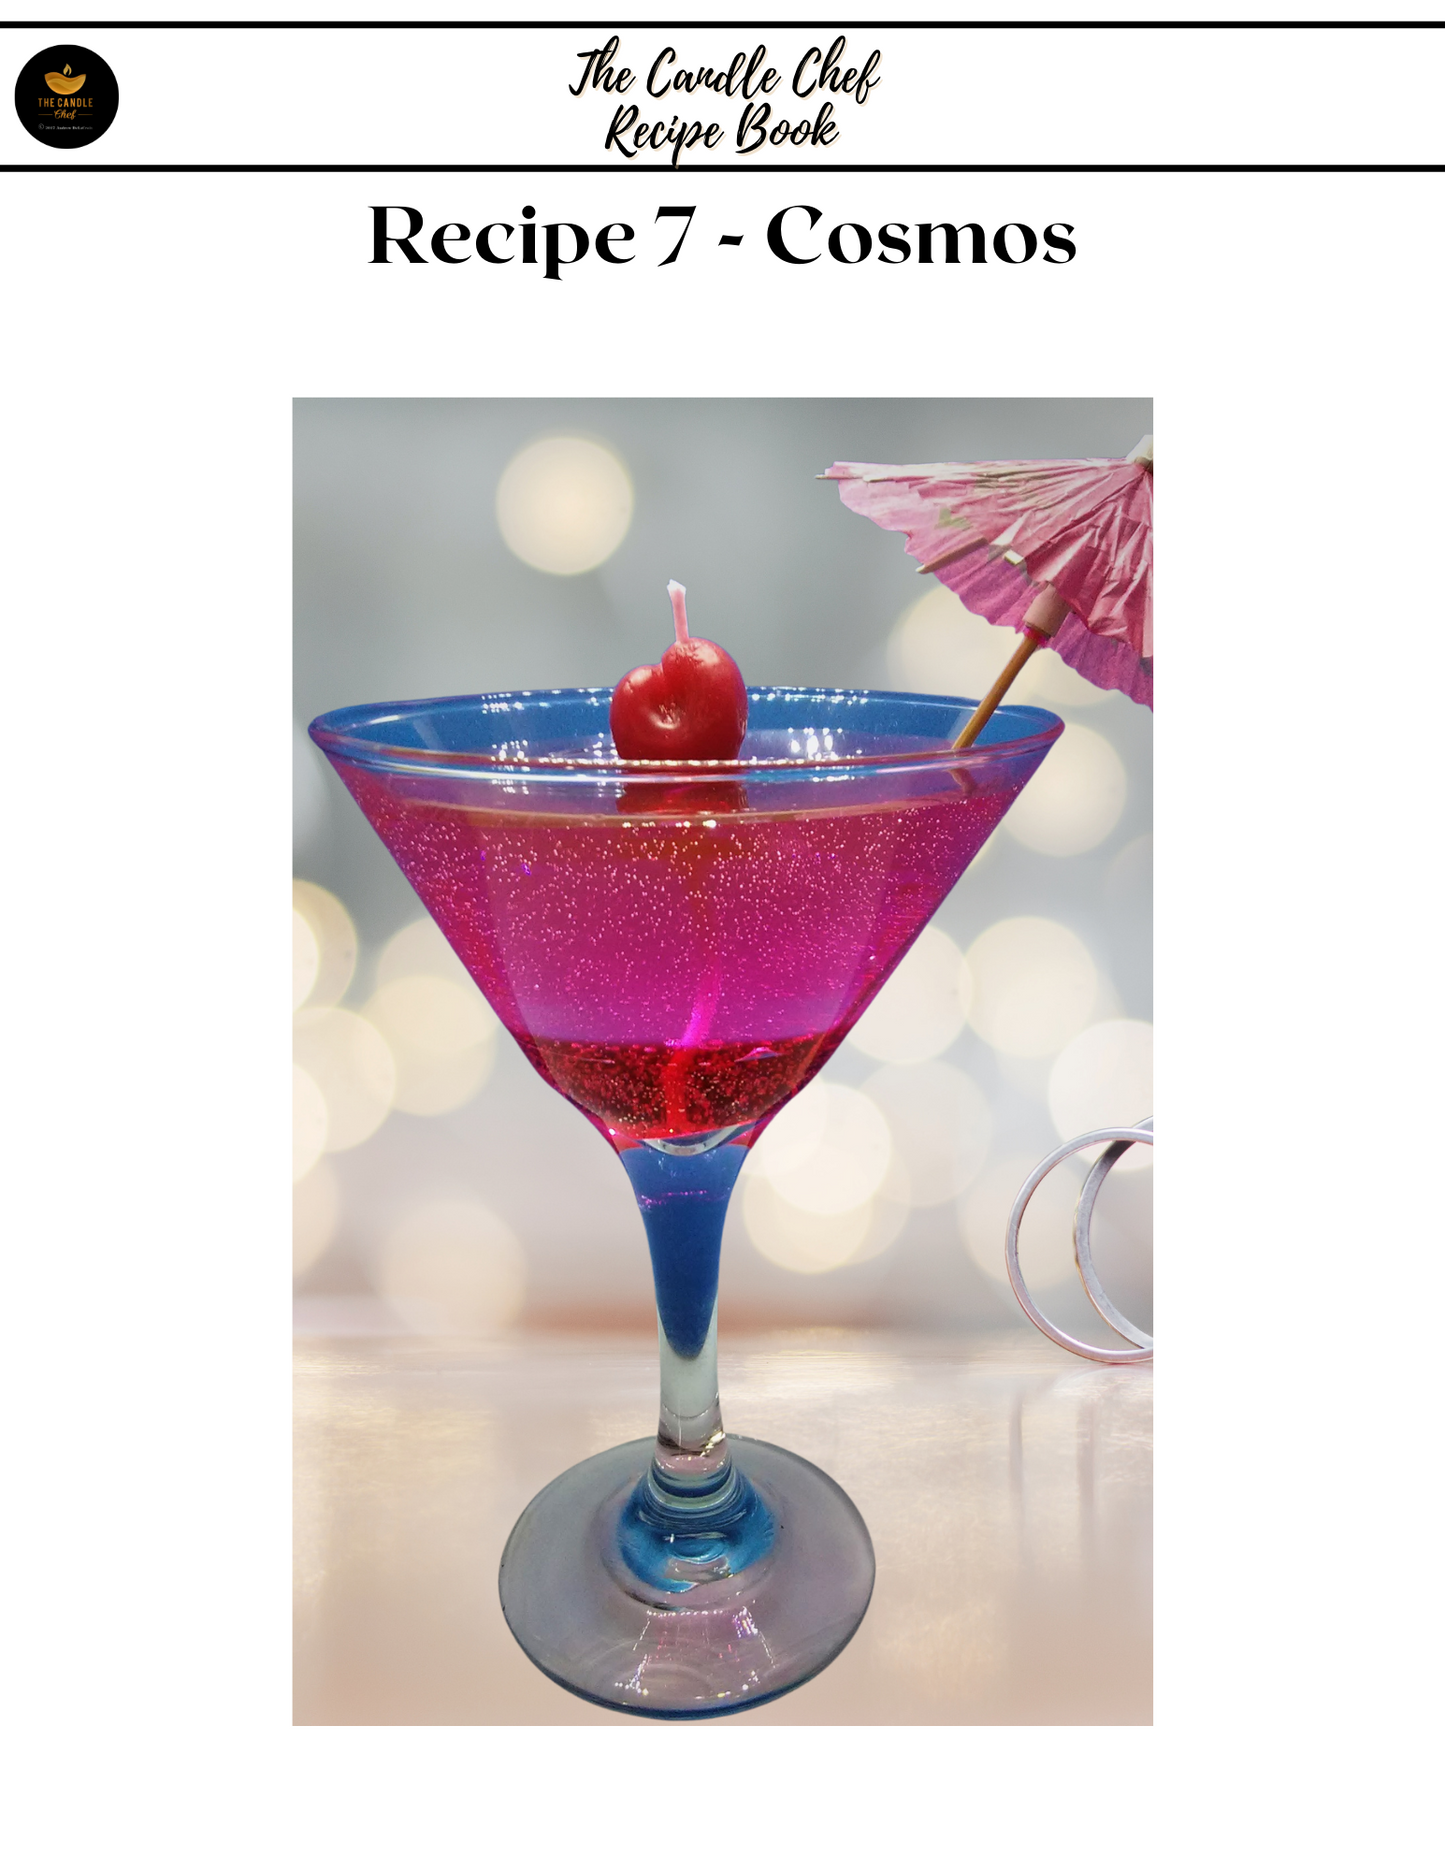 The Candle Chef Recipe Book